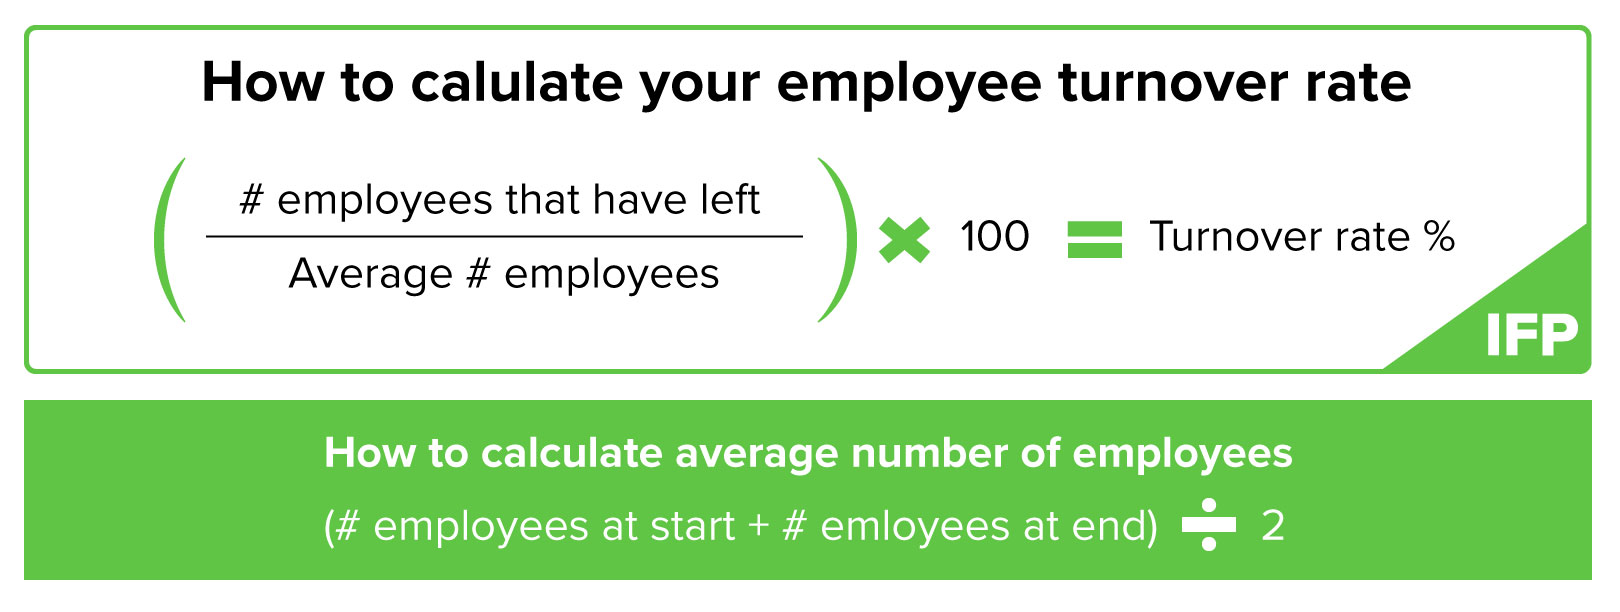 Employee turnover formula